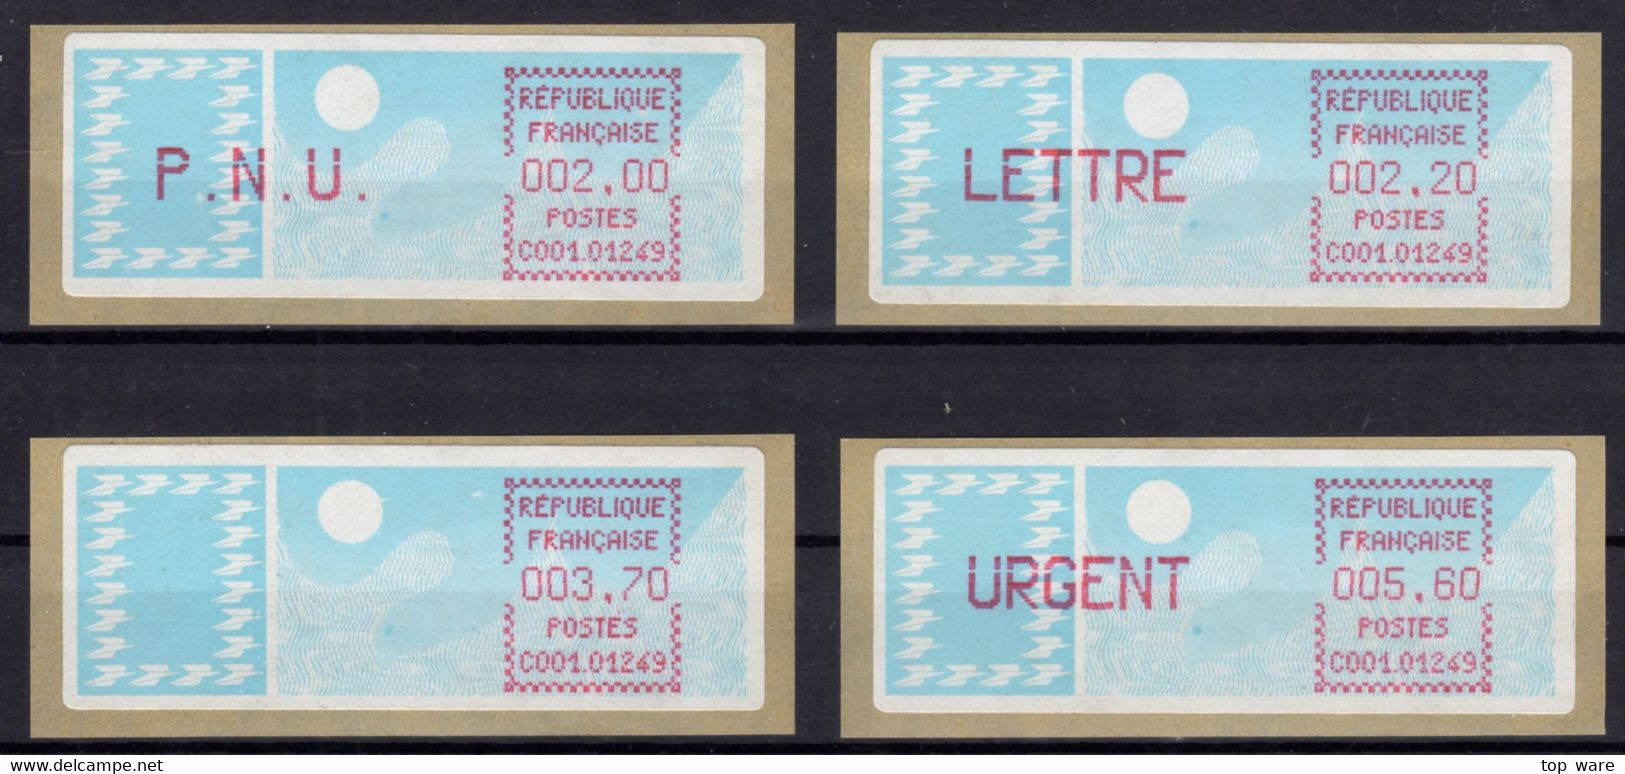 France ATM Stamps C001.01249 Michel 6.3 Zd Series ZS4 Neuf / MNH / Crouzet LSA Distributeurs Automatenmarken Frama Lisa - 1985 « Carrier » Paper